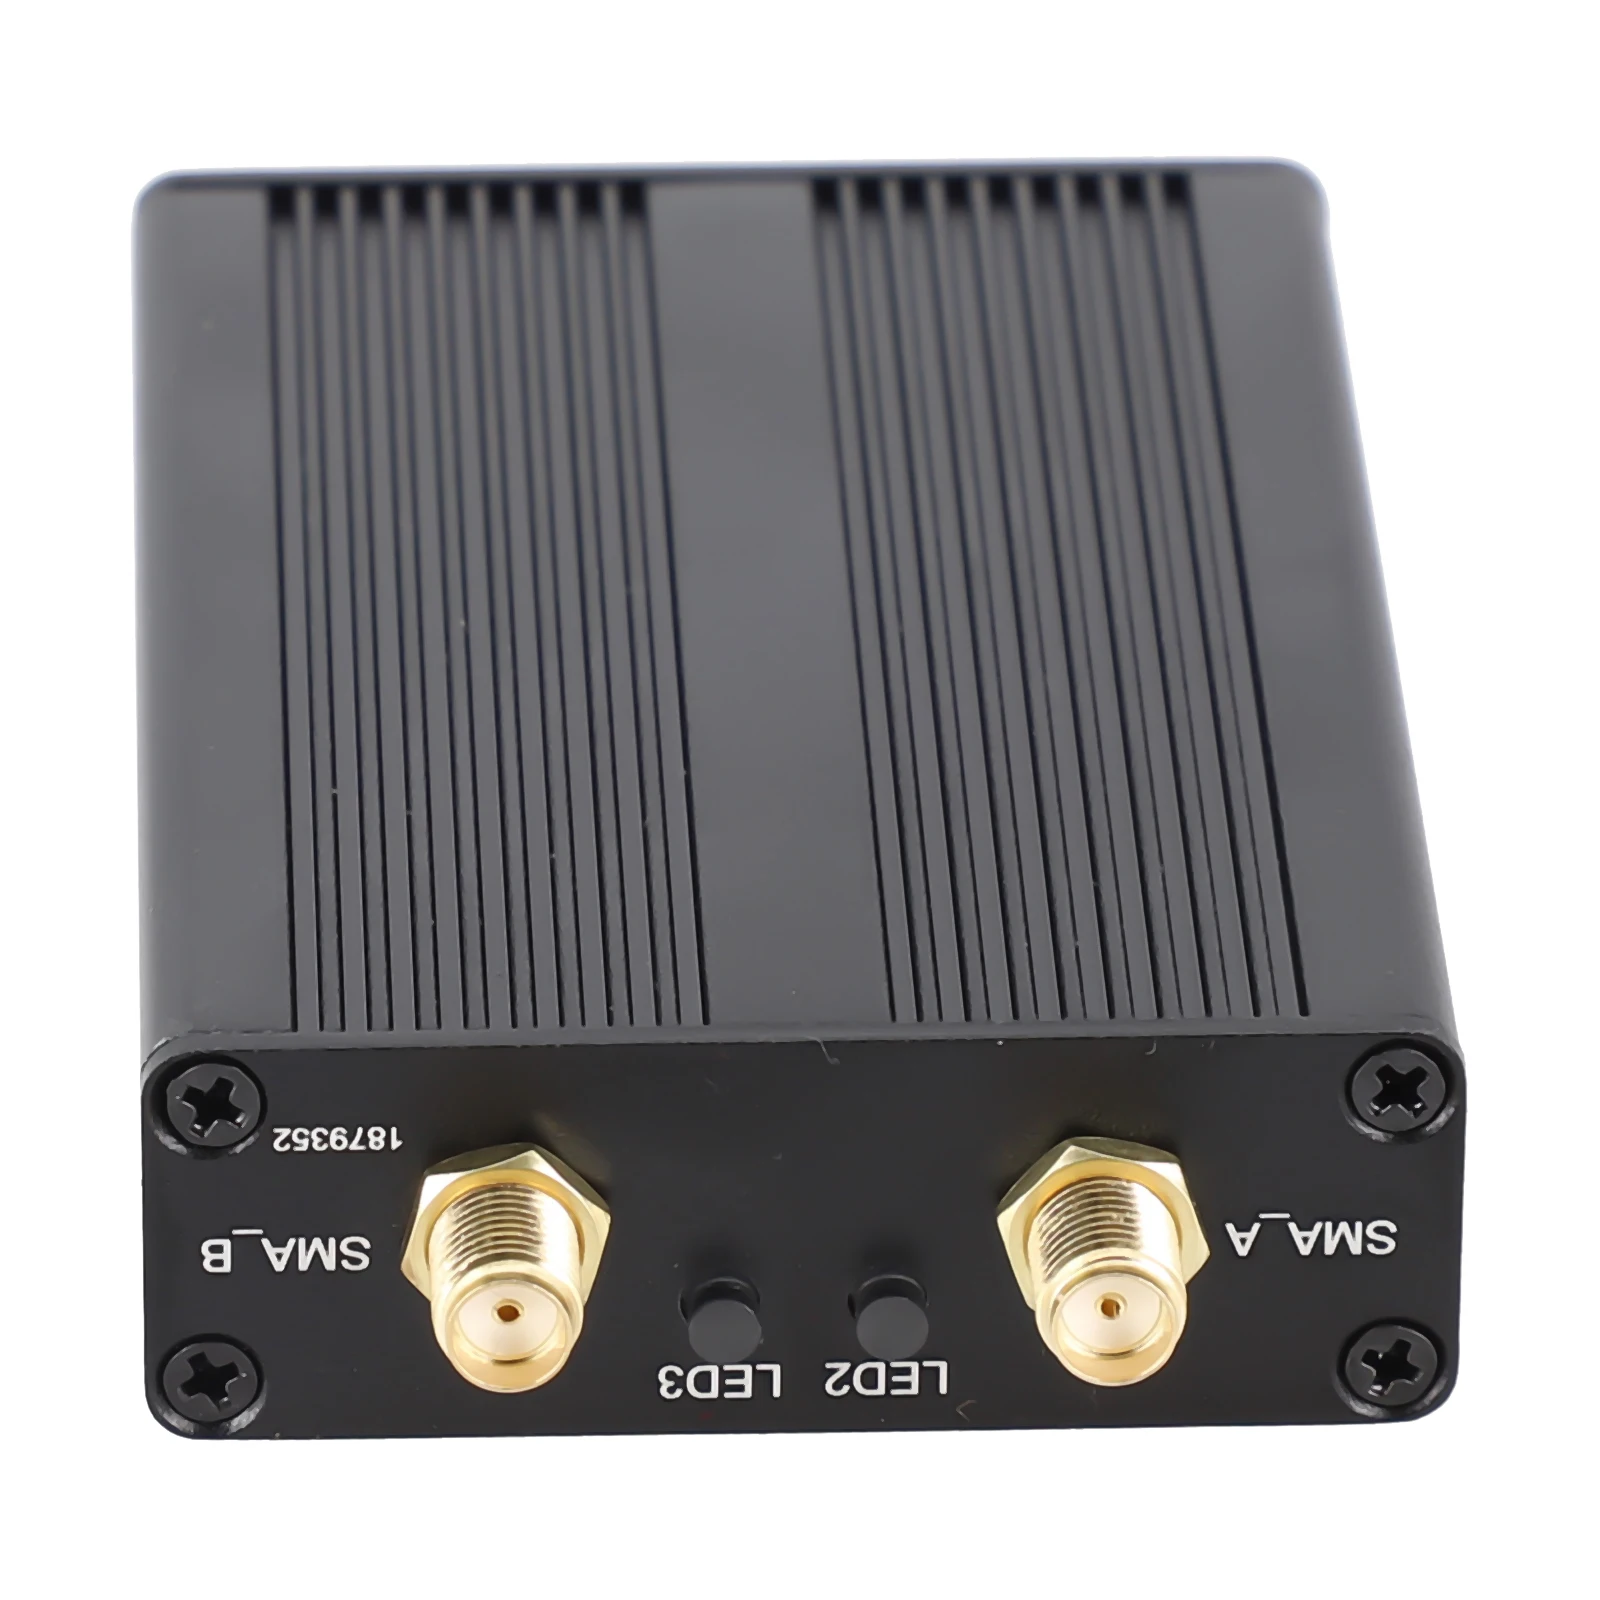 

Spectrum Analyzer LTDZ 35-4400M Signal Source Tracking Source WinNWT4 Case USB-RF Frequency Domain Analysis Tool